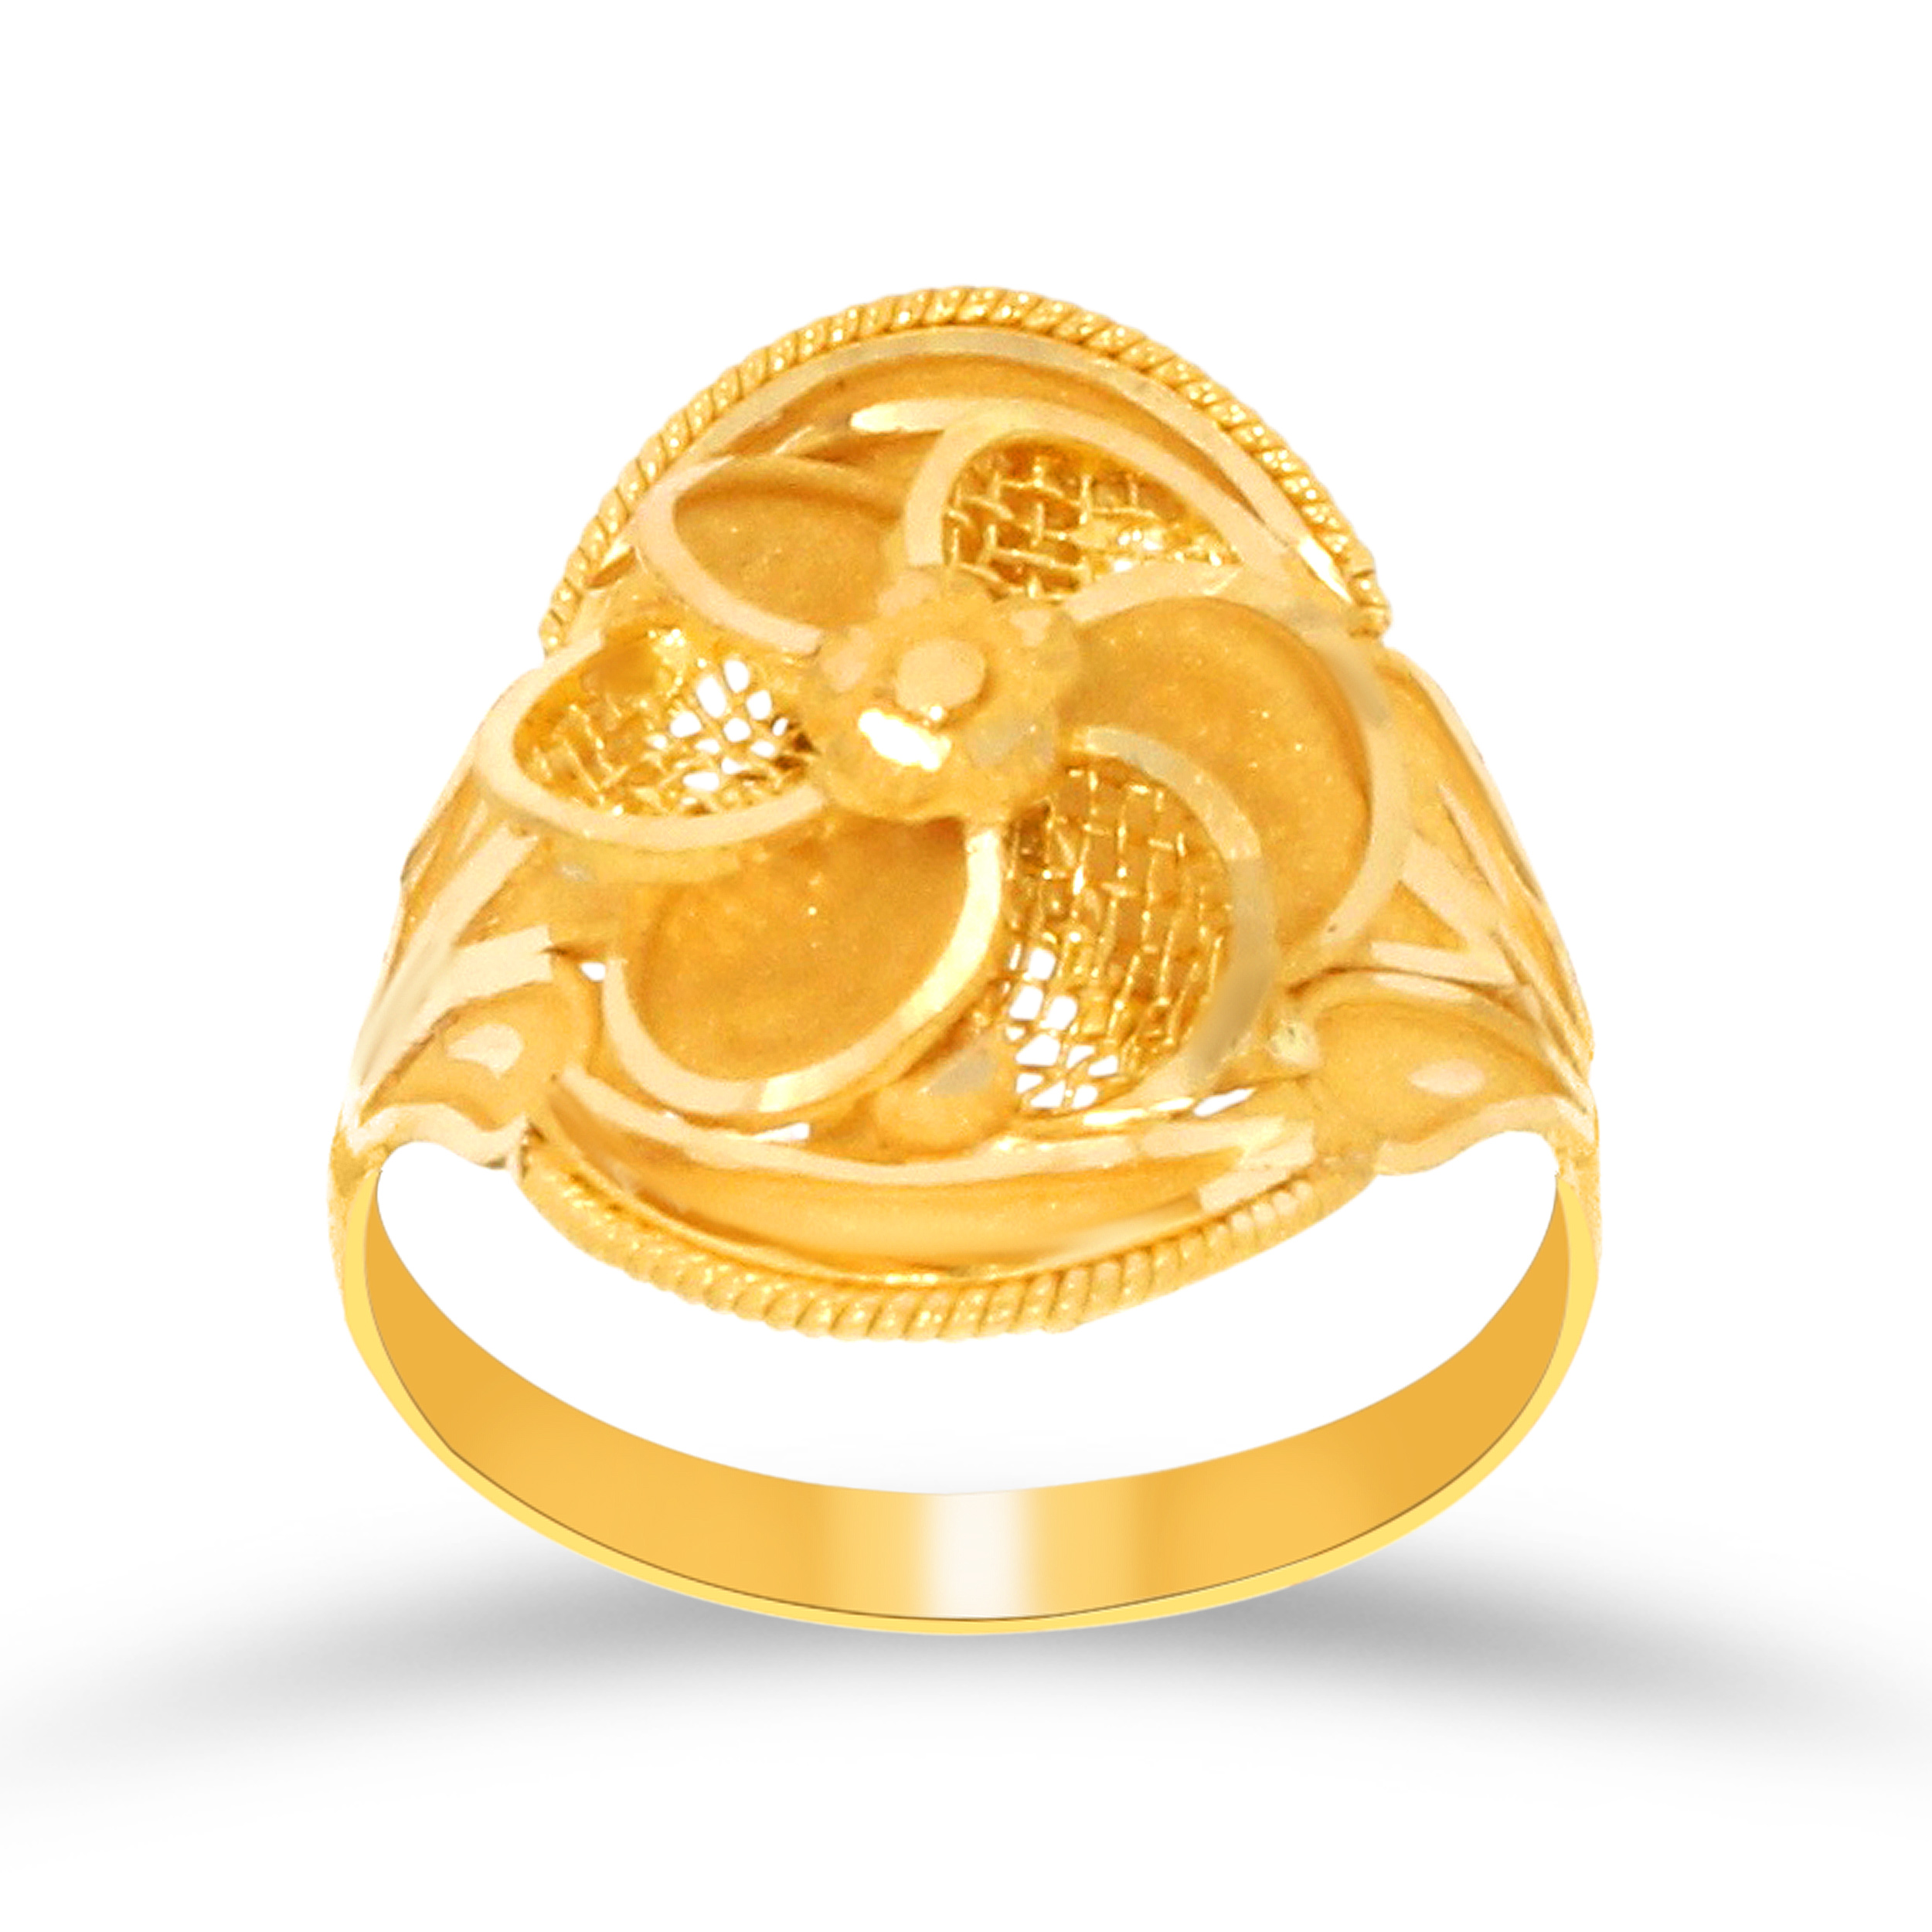 SUN AABI JEWELS 22CT  BIS HALLMARK GOLD RING FOR  WOMEN